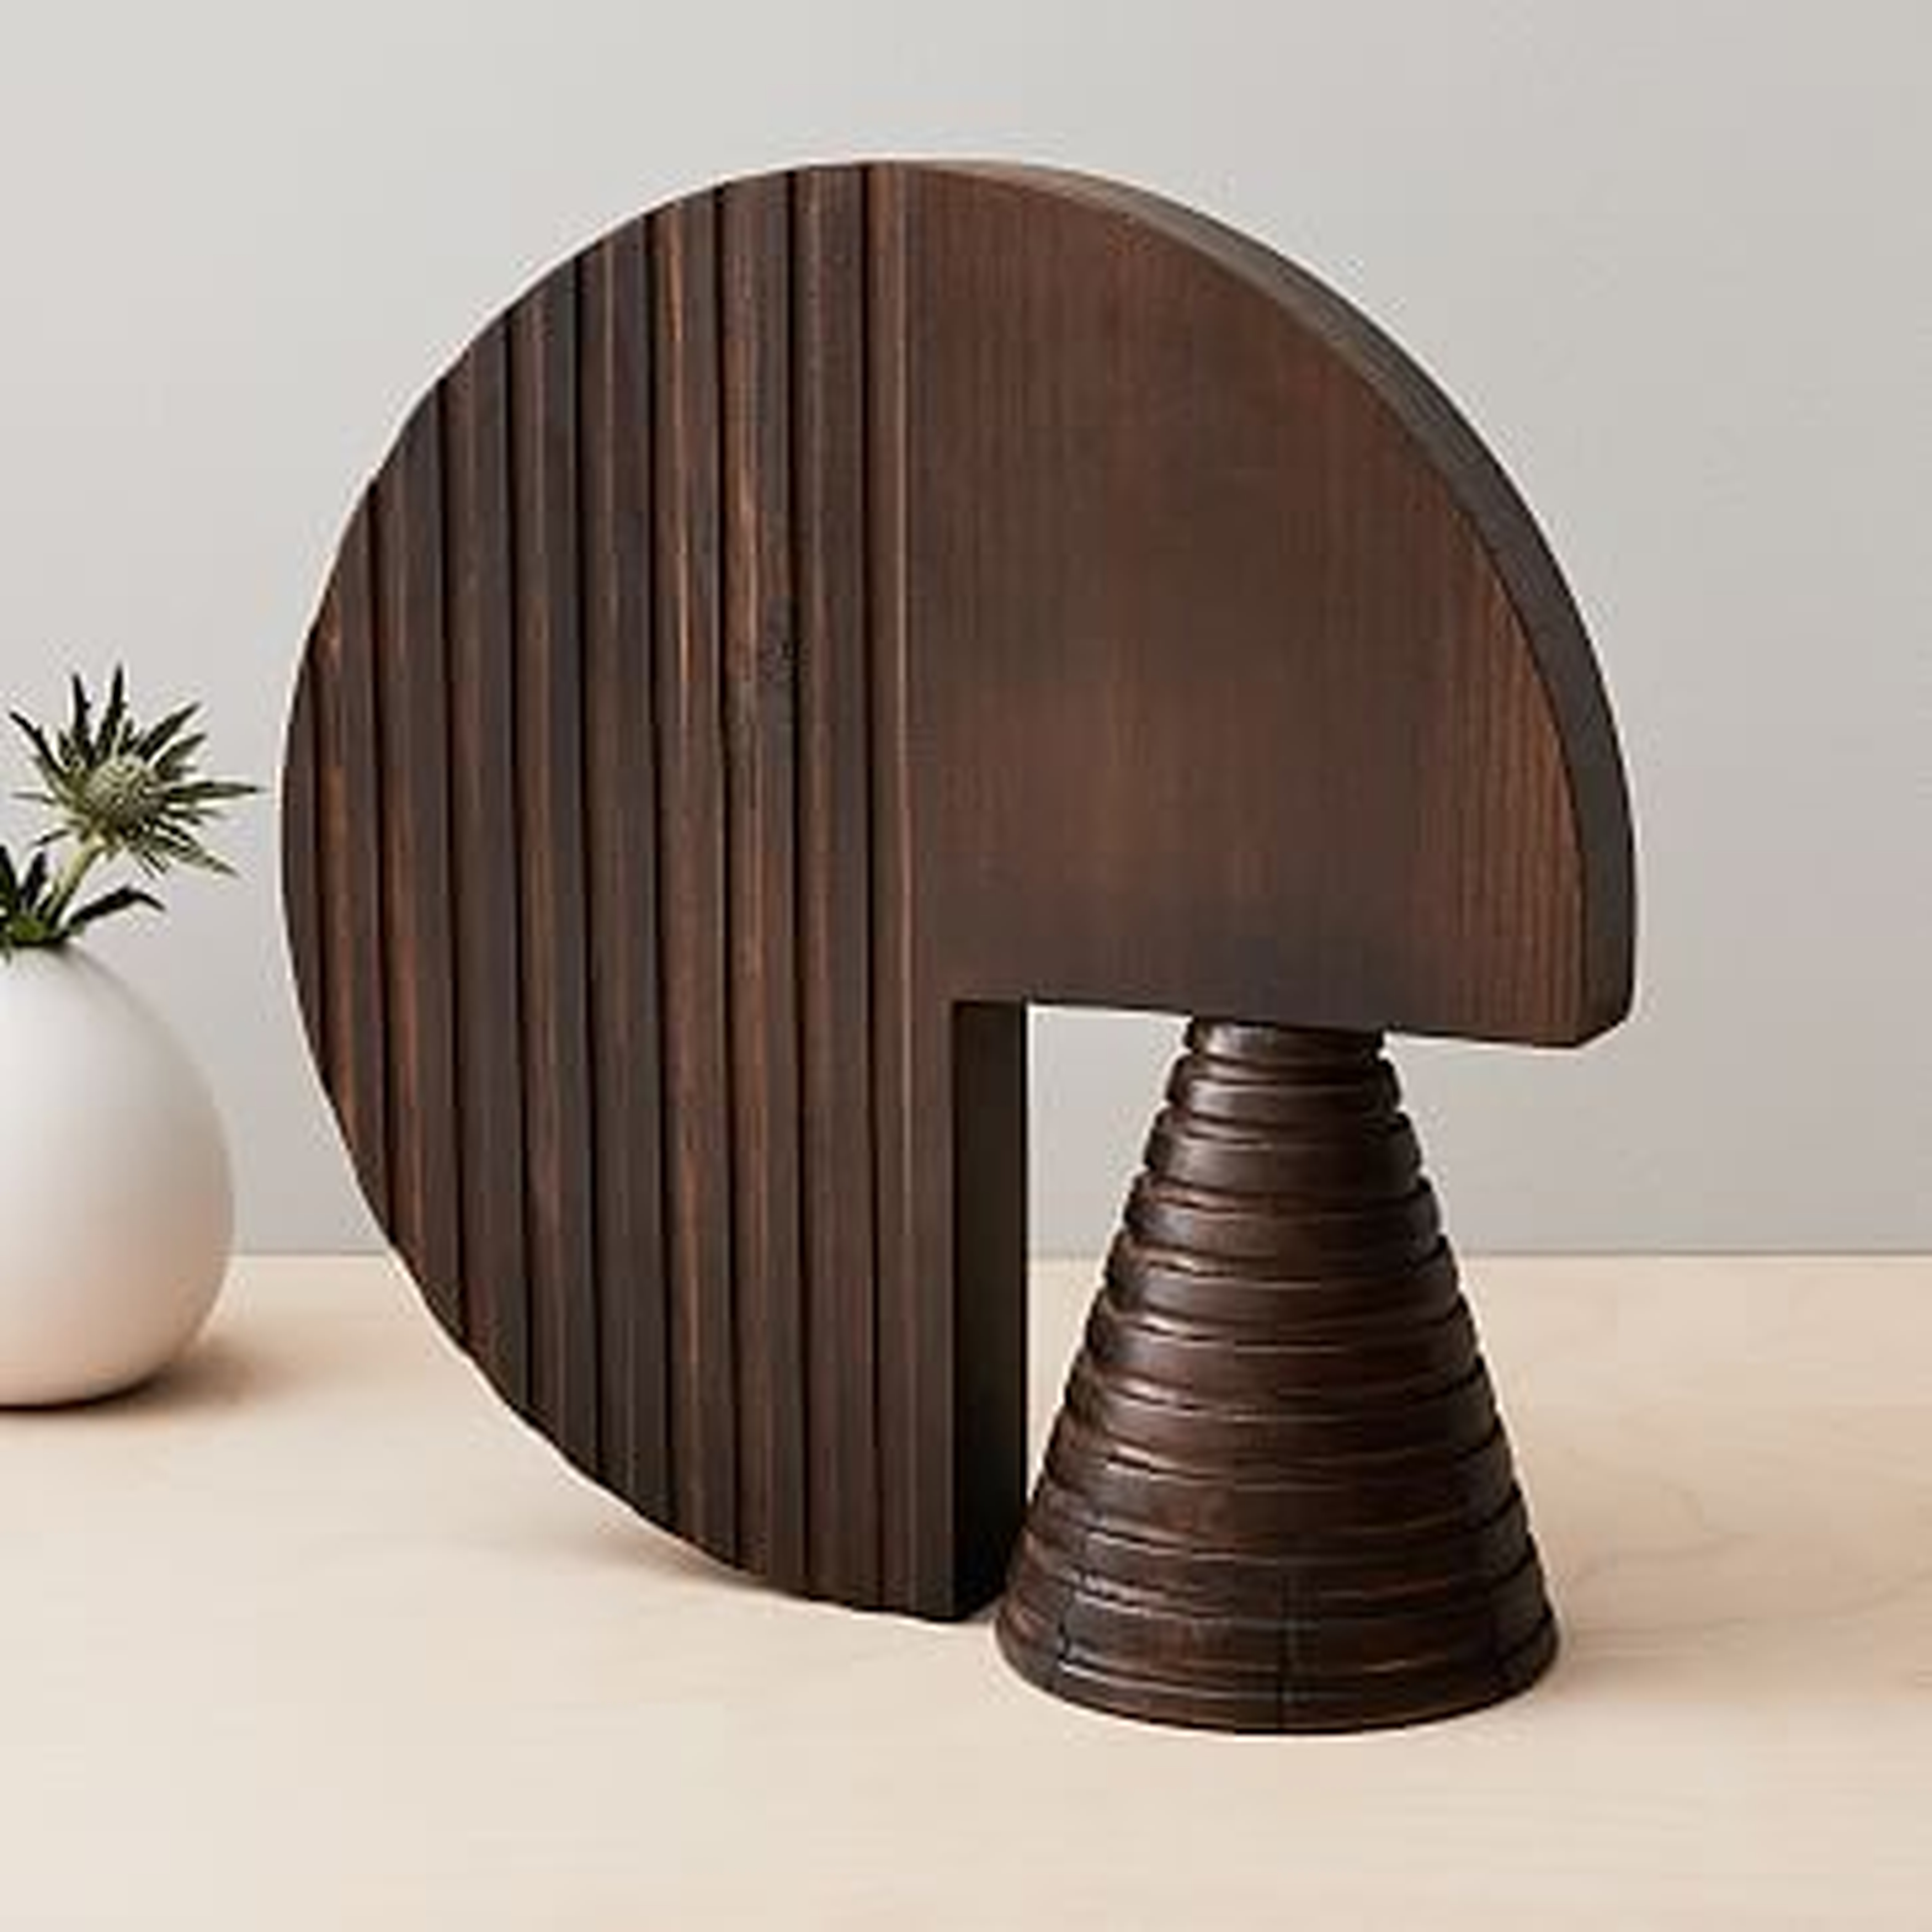 Diego Olivero Wood Decorative Object, Circle - West Elm